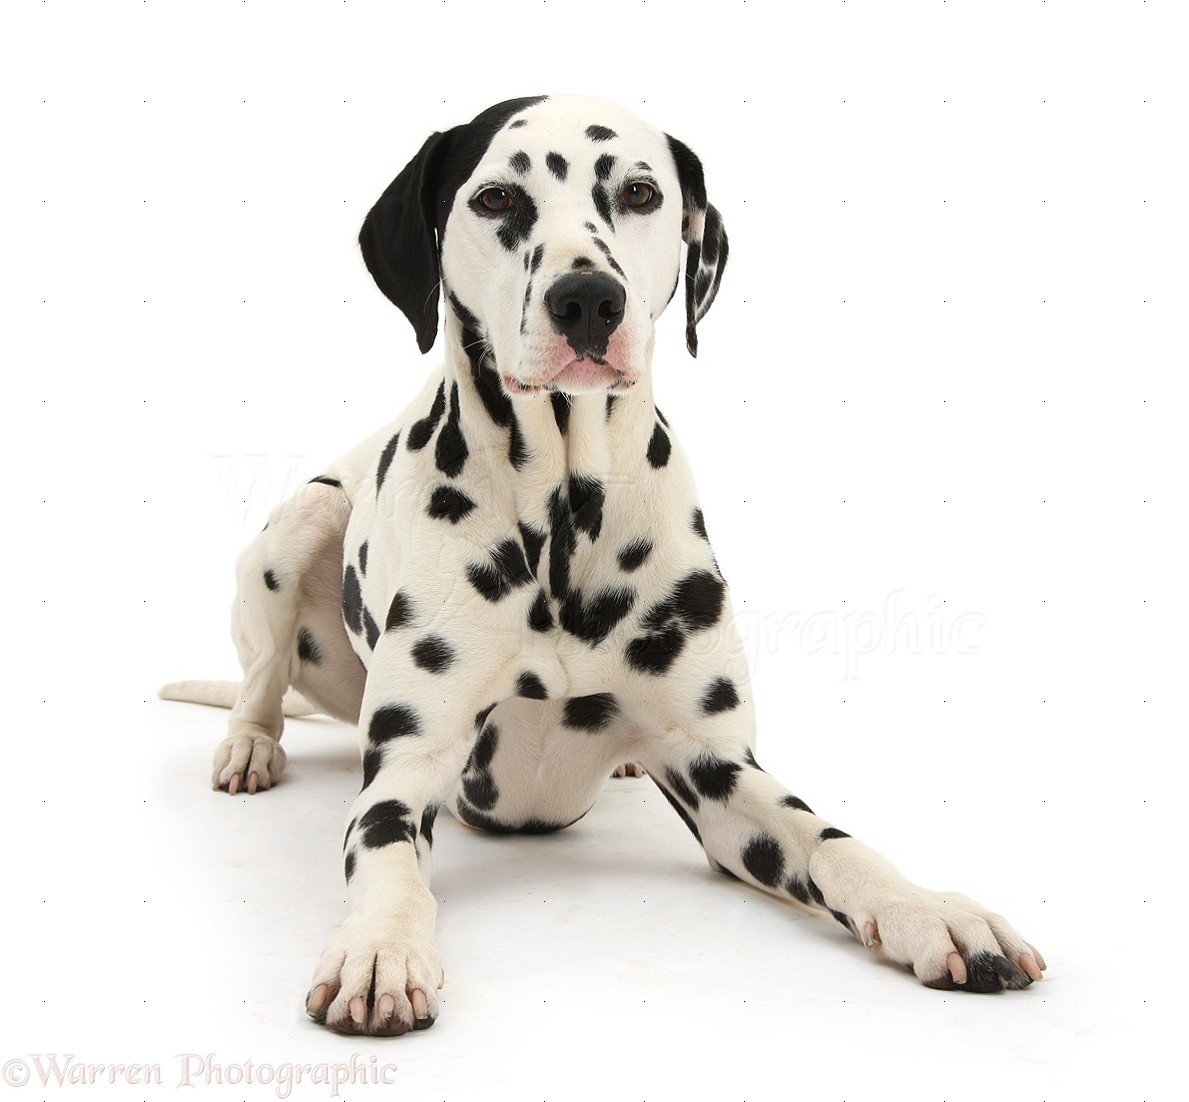 Wp38628 Dalmatian Dog Jack Years Old With One Black Ear Lying